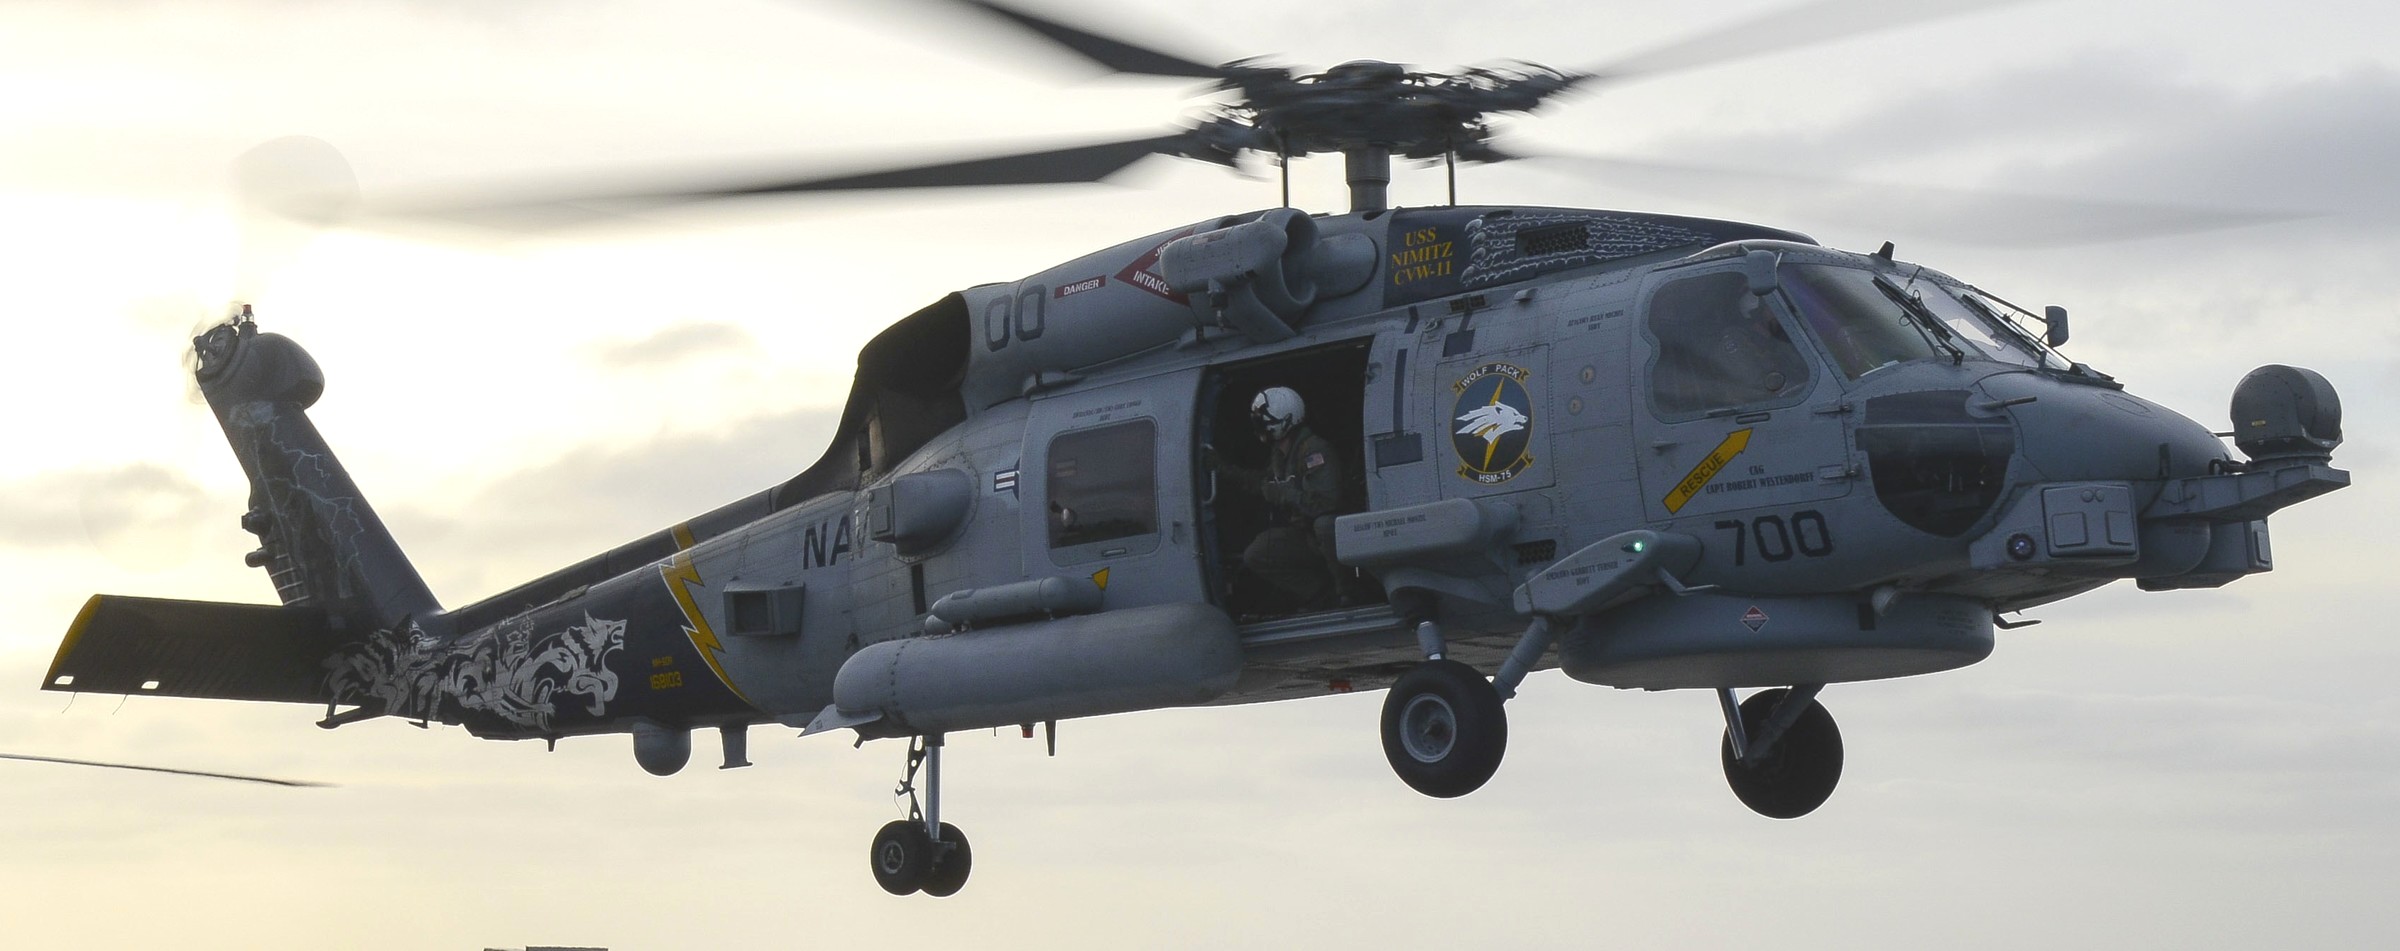 hsm-75 wolf pack helicopter maritime strike squadron mh-60r seahawk cvw-11 cvn-68 uss nimitz 46